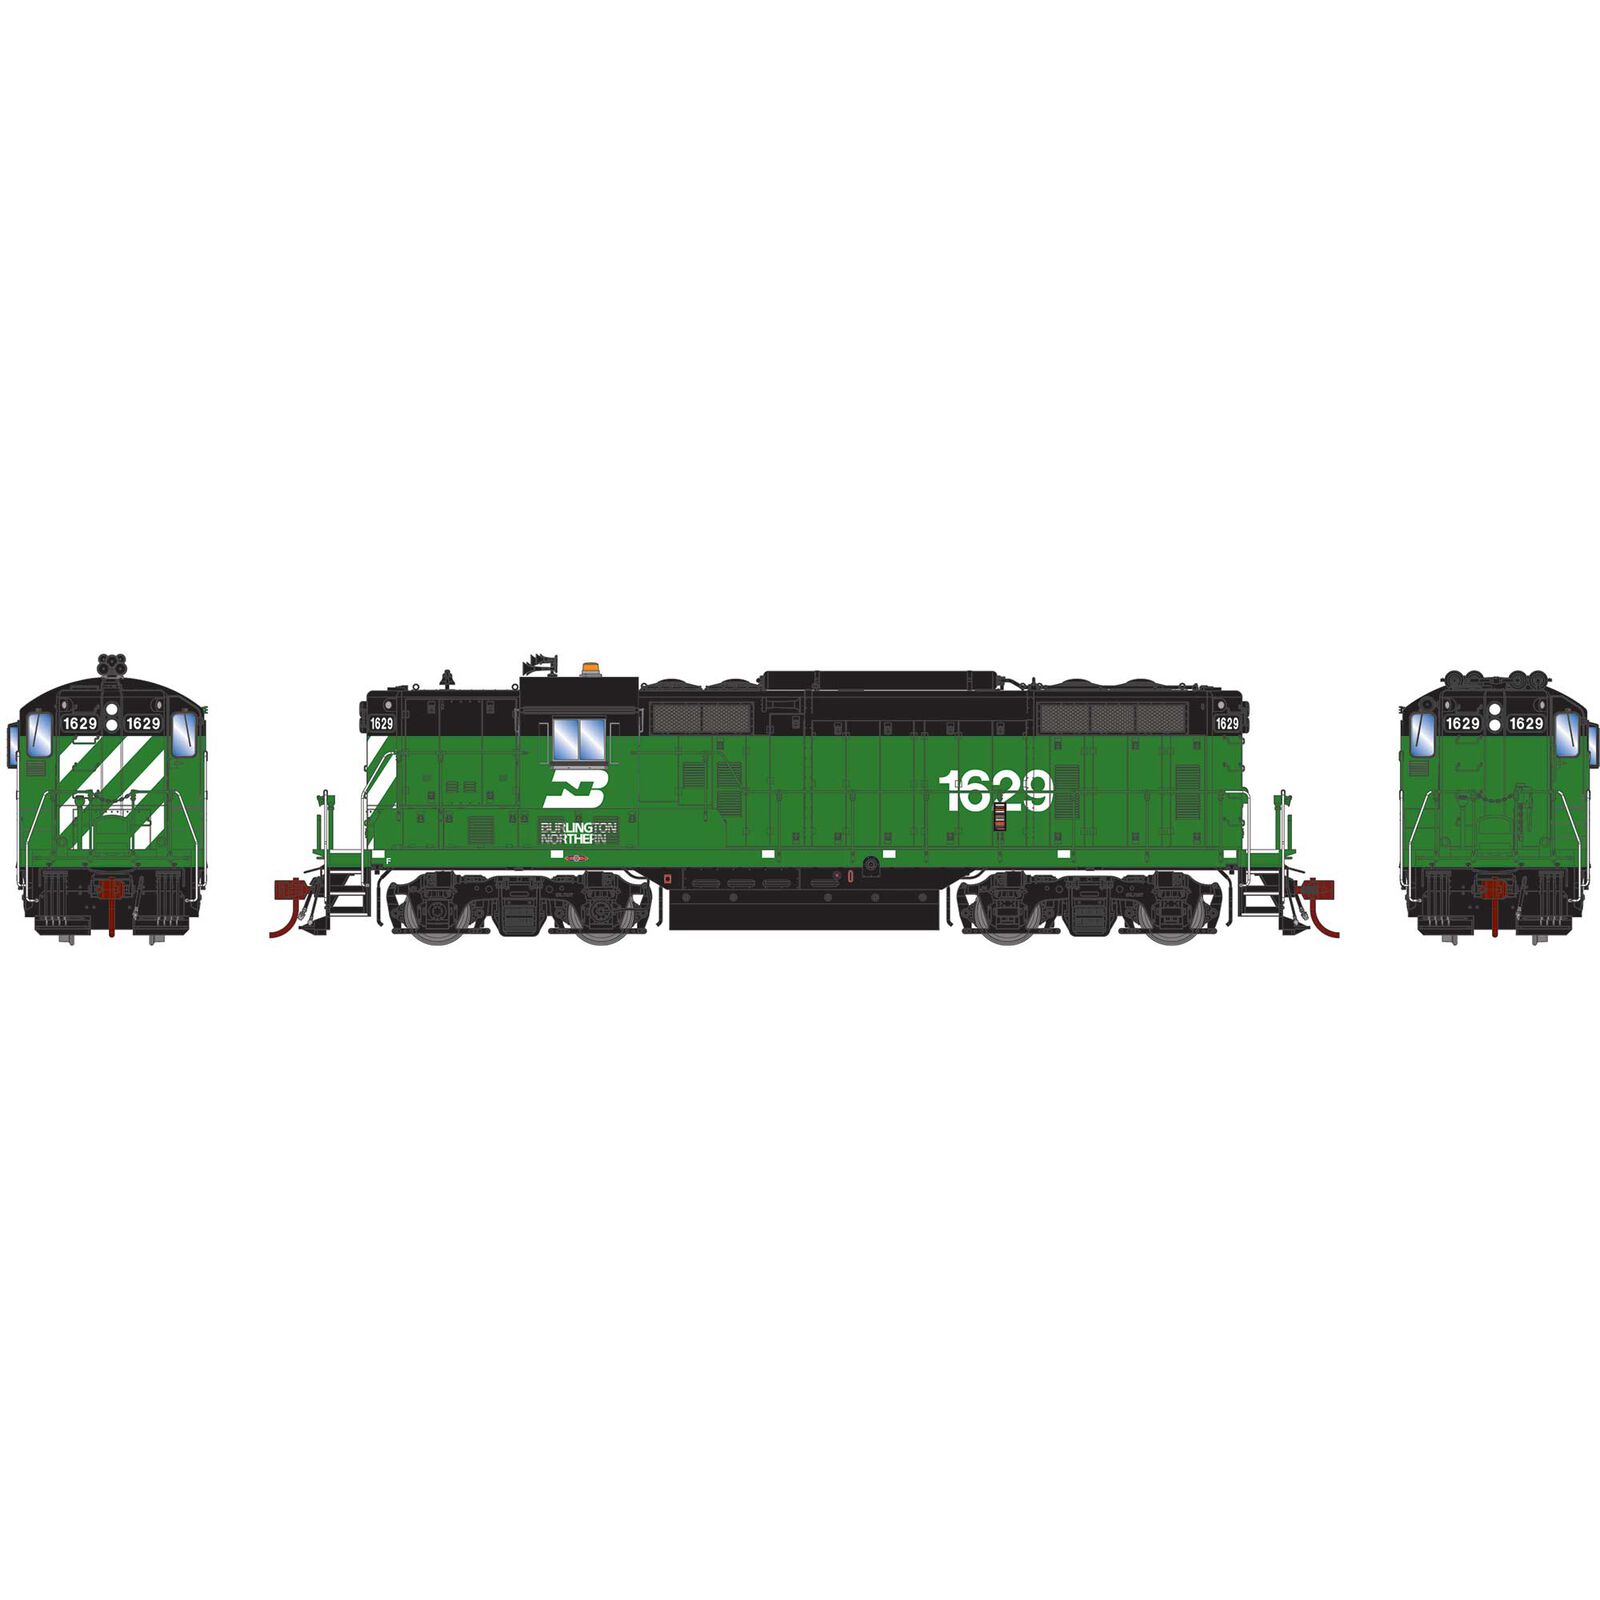 HO GP7 Locomotive with DCC & Sound, BN #1629